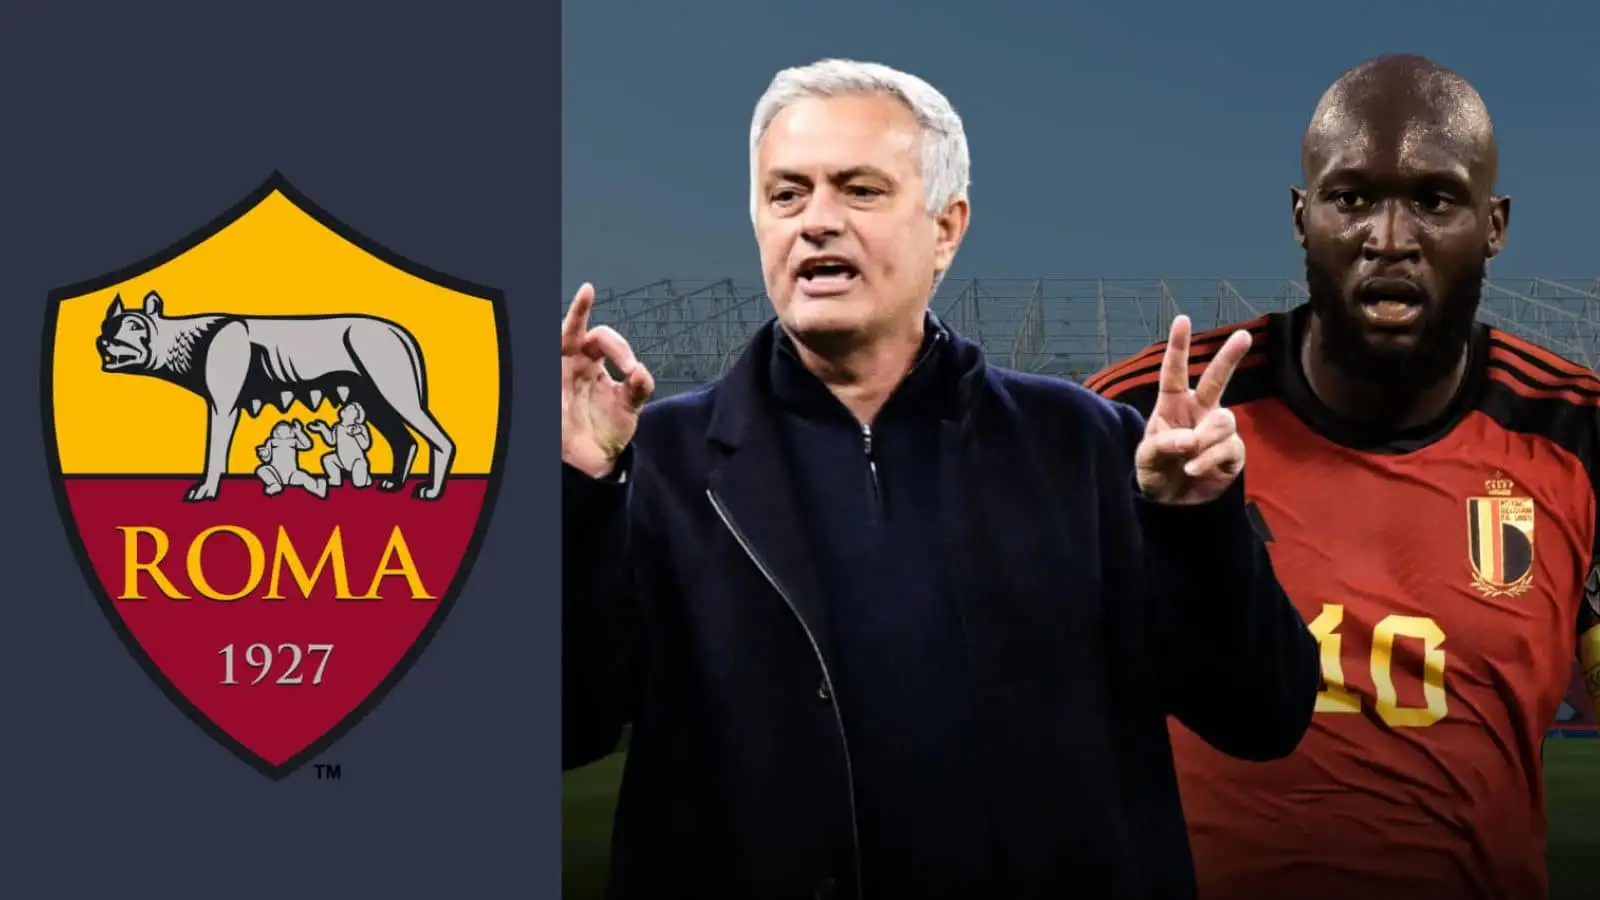 Jose Mourinho and Romelu Lukaku have reunited for Roma